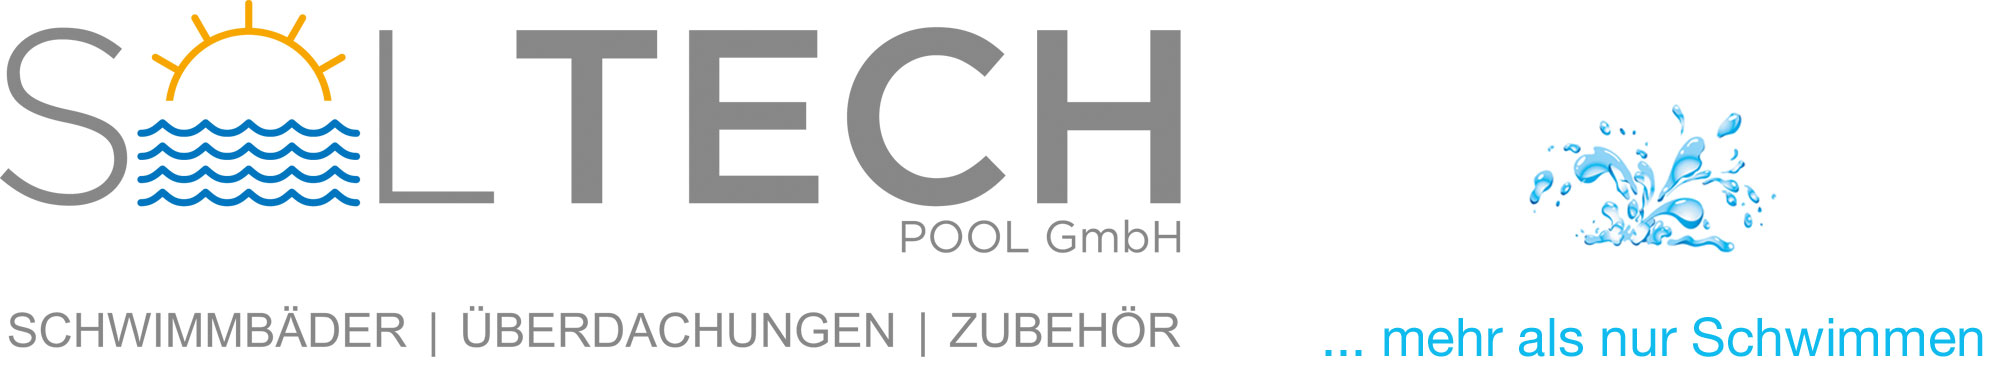 Soltech Pool GmbH